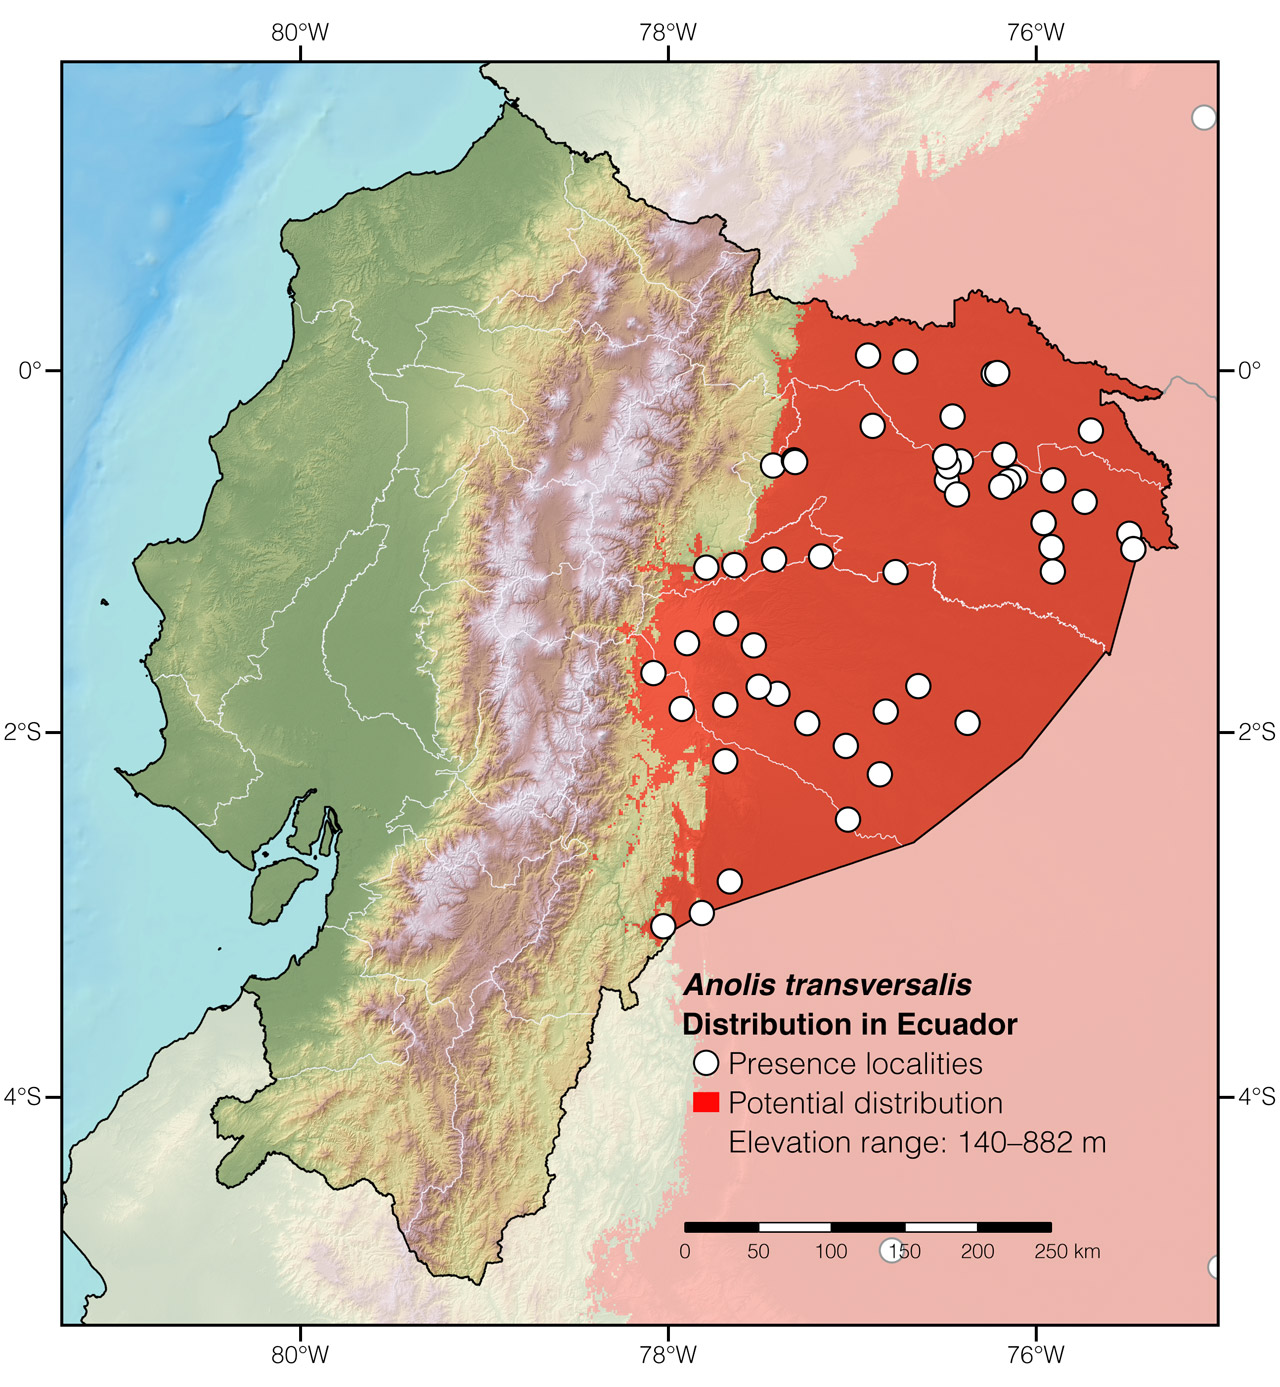 Distribution of Anolis transversalis in Ecuador